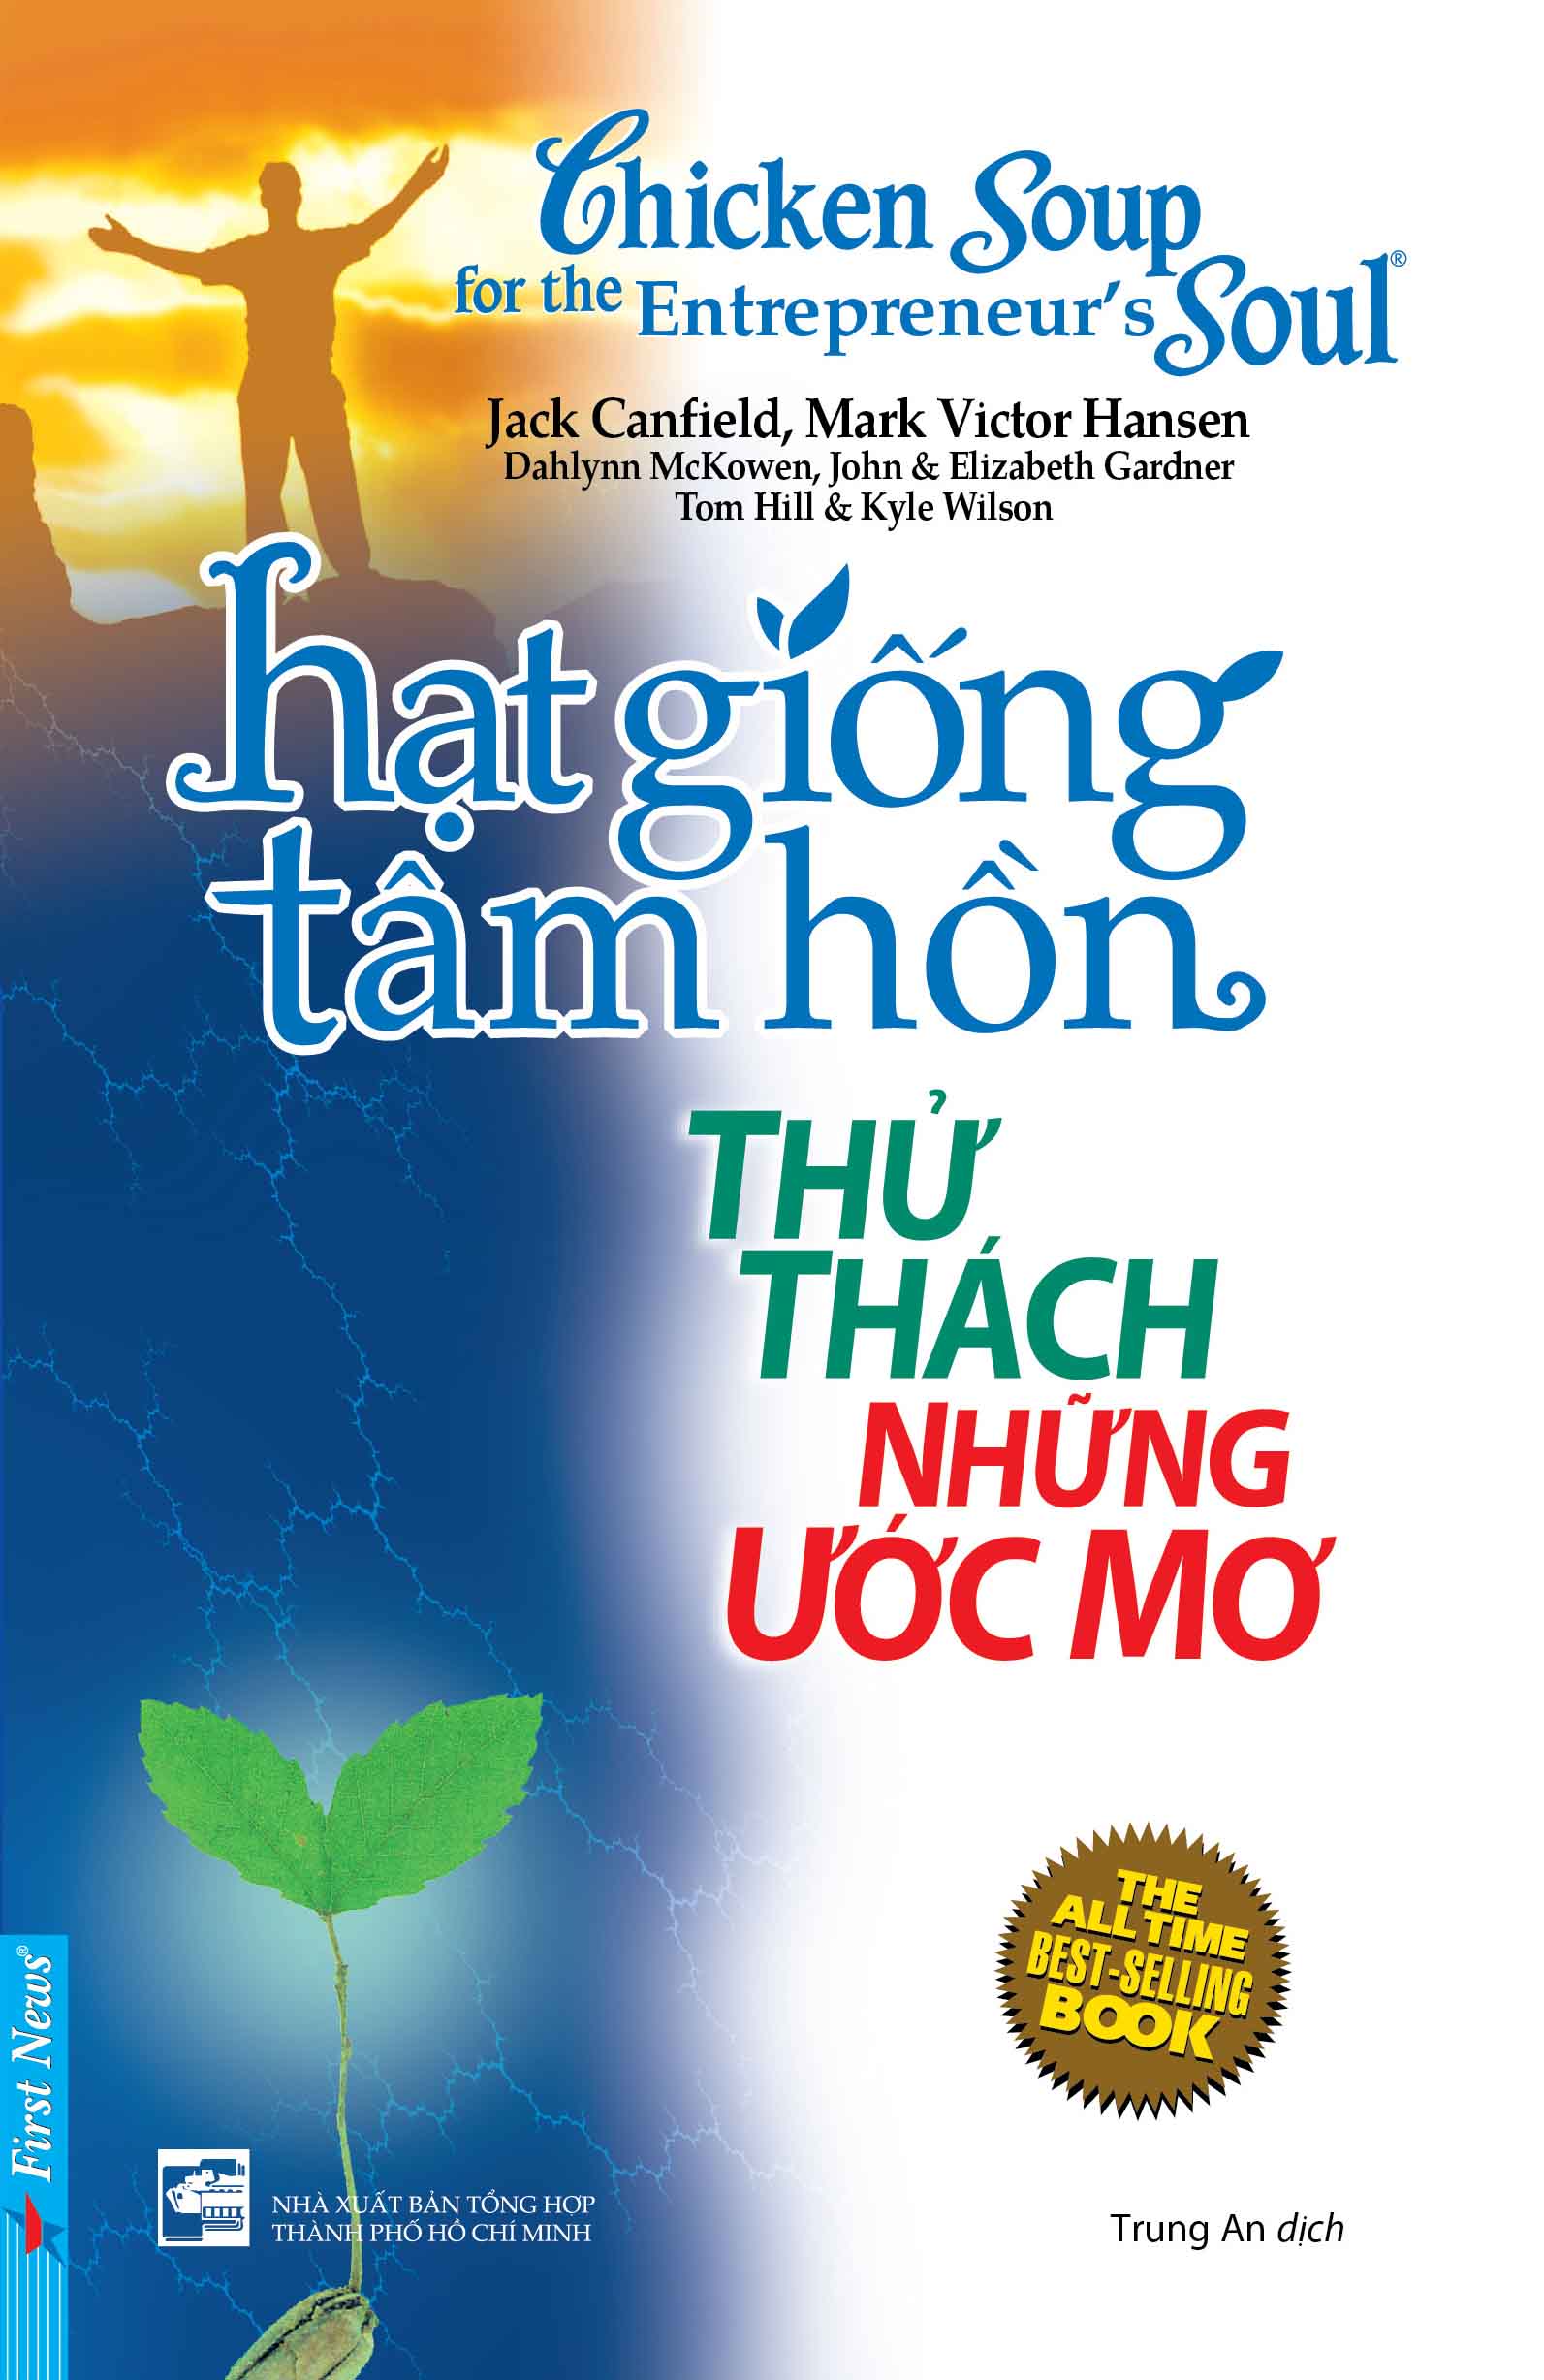 thuthachuocmo-68k-bia1.jpg